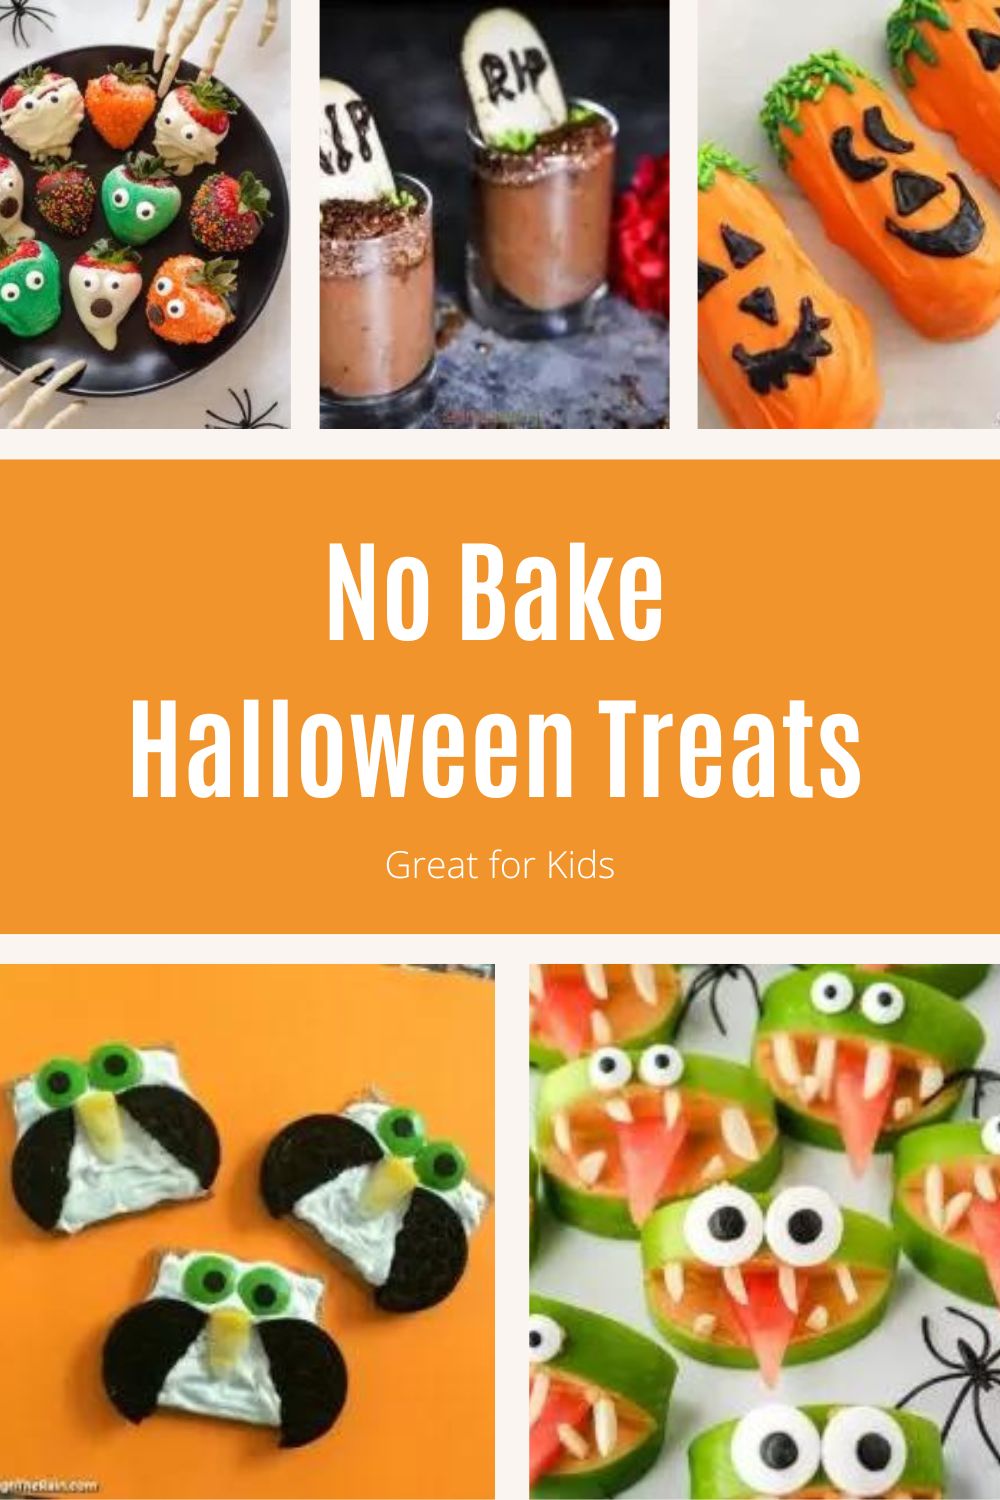 16 Easy & Spooky No Bake Halloween Treats - Fun And Delicious